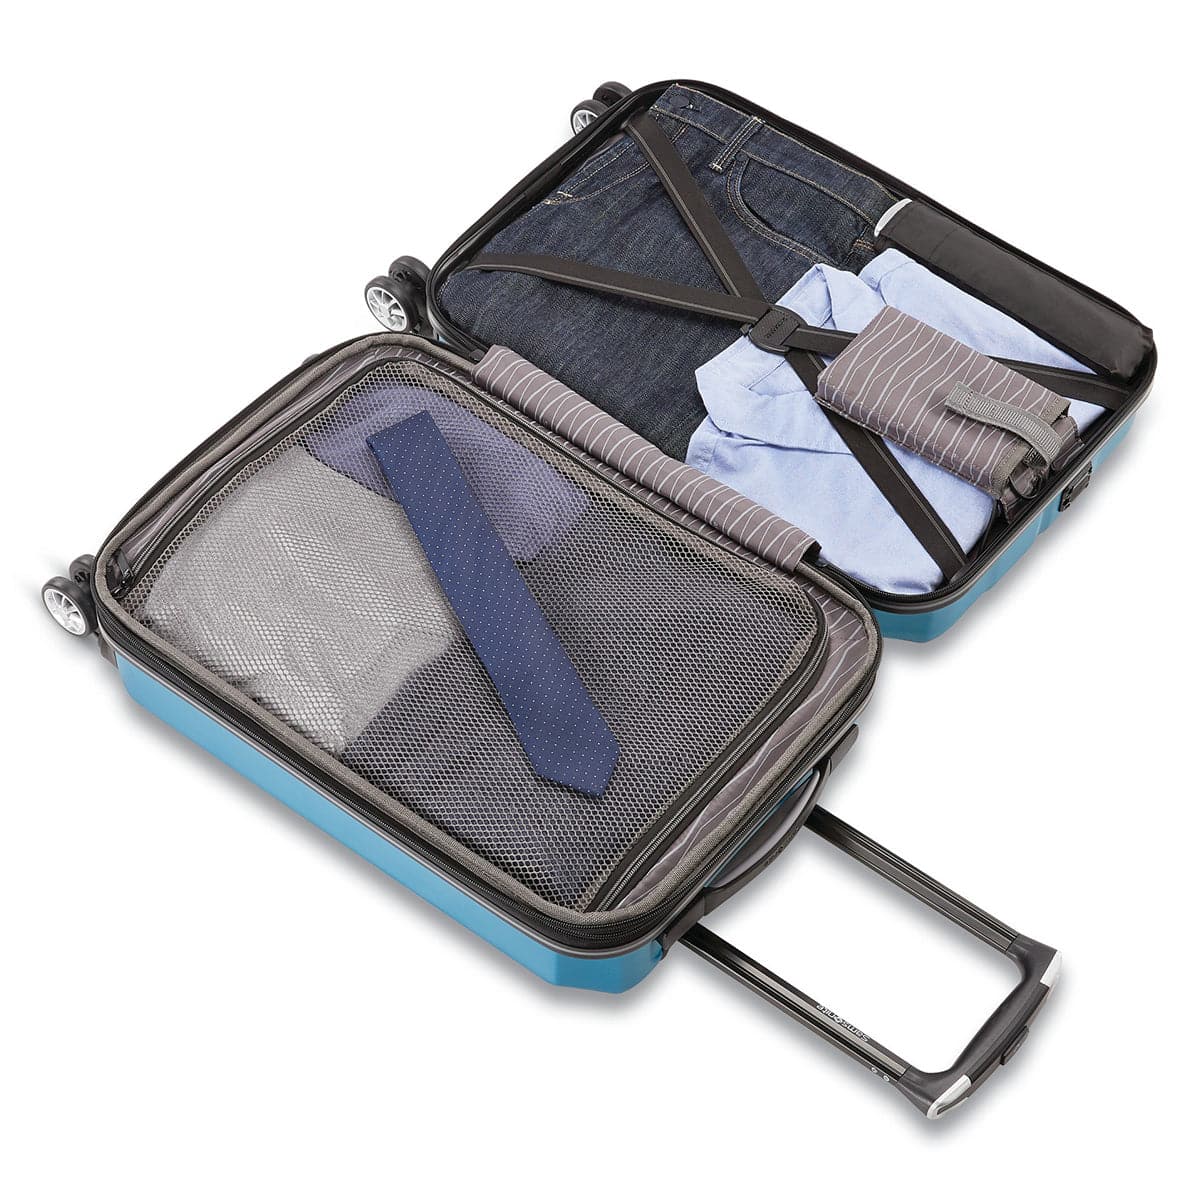 Samsonite Opto PC 2 Hardside 22" Spinner Carry On Luggage